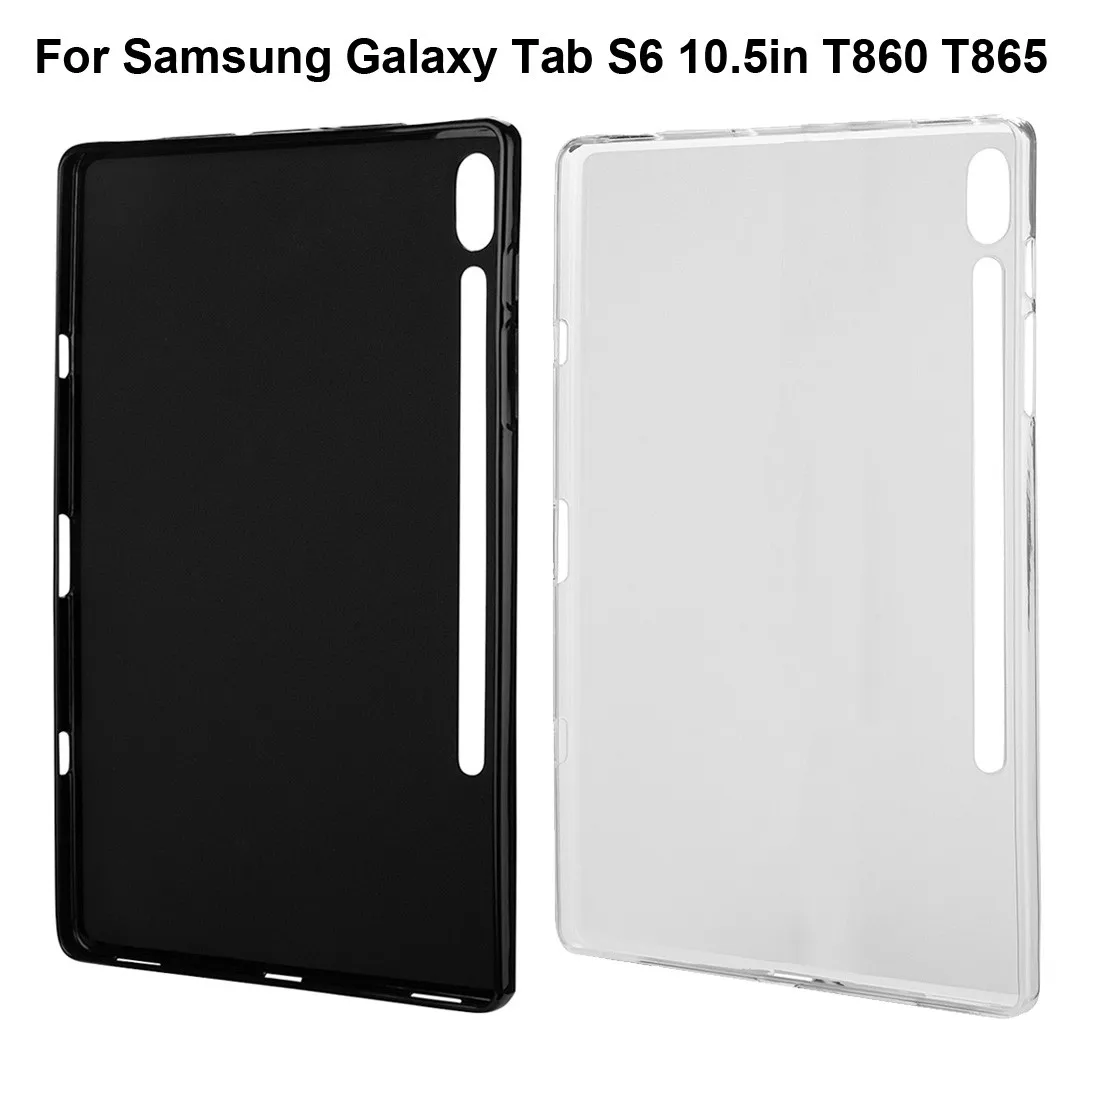 Защитный чехол для Samsung Galaxy Tab S6 10.5in T860 T865 мягкий прозрачный TPU противоударный чехол# T2